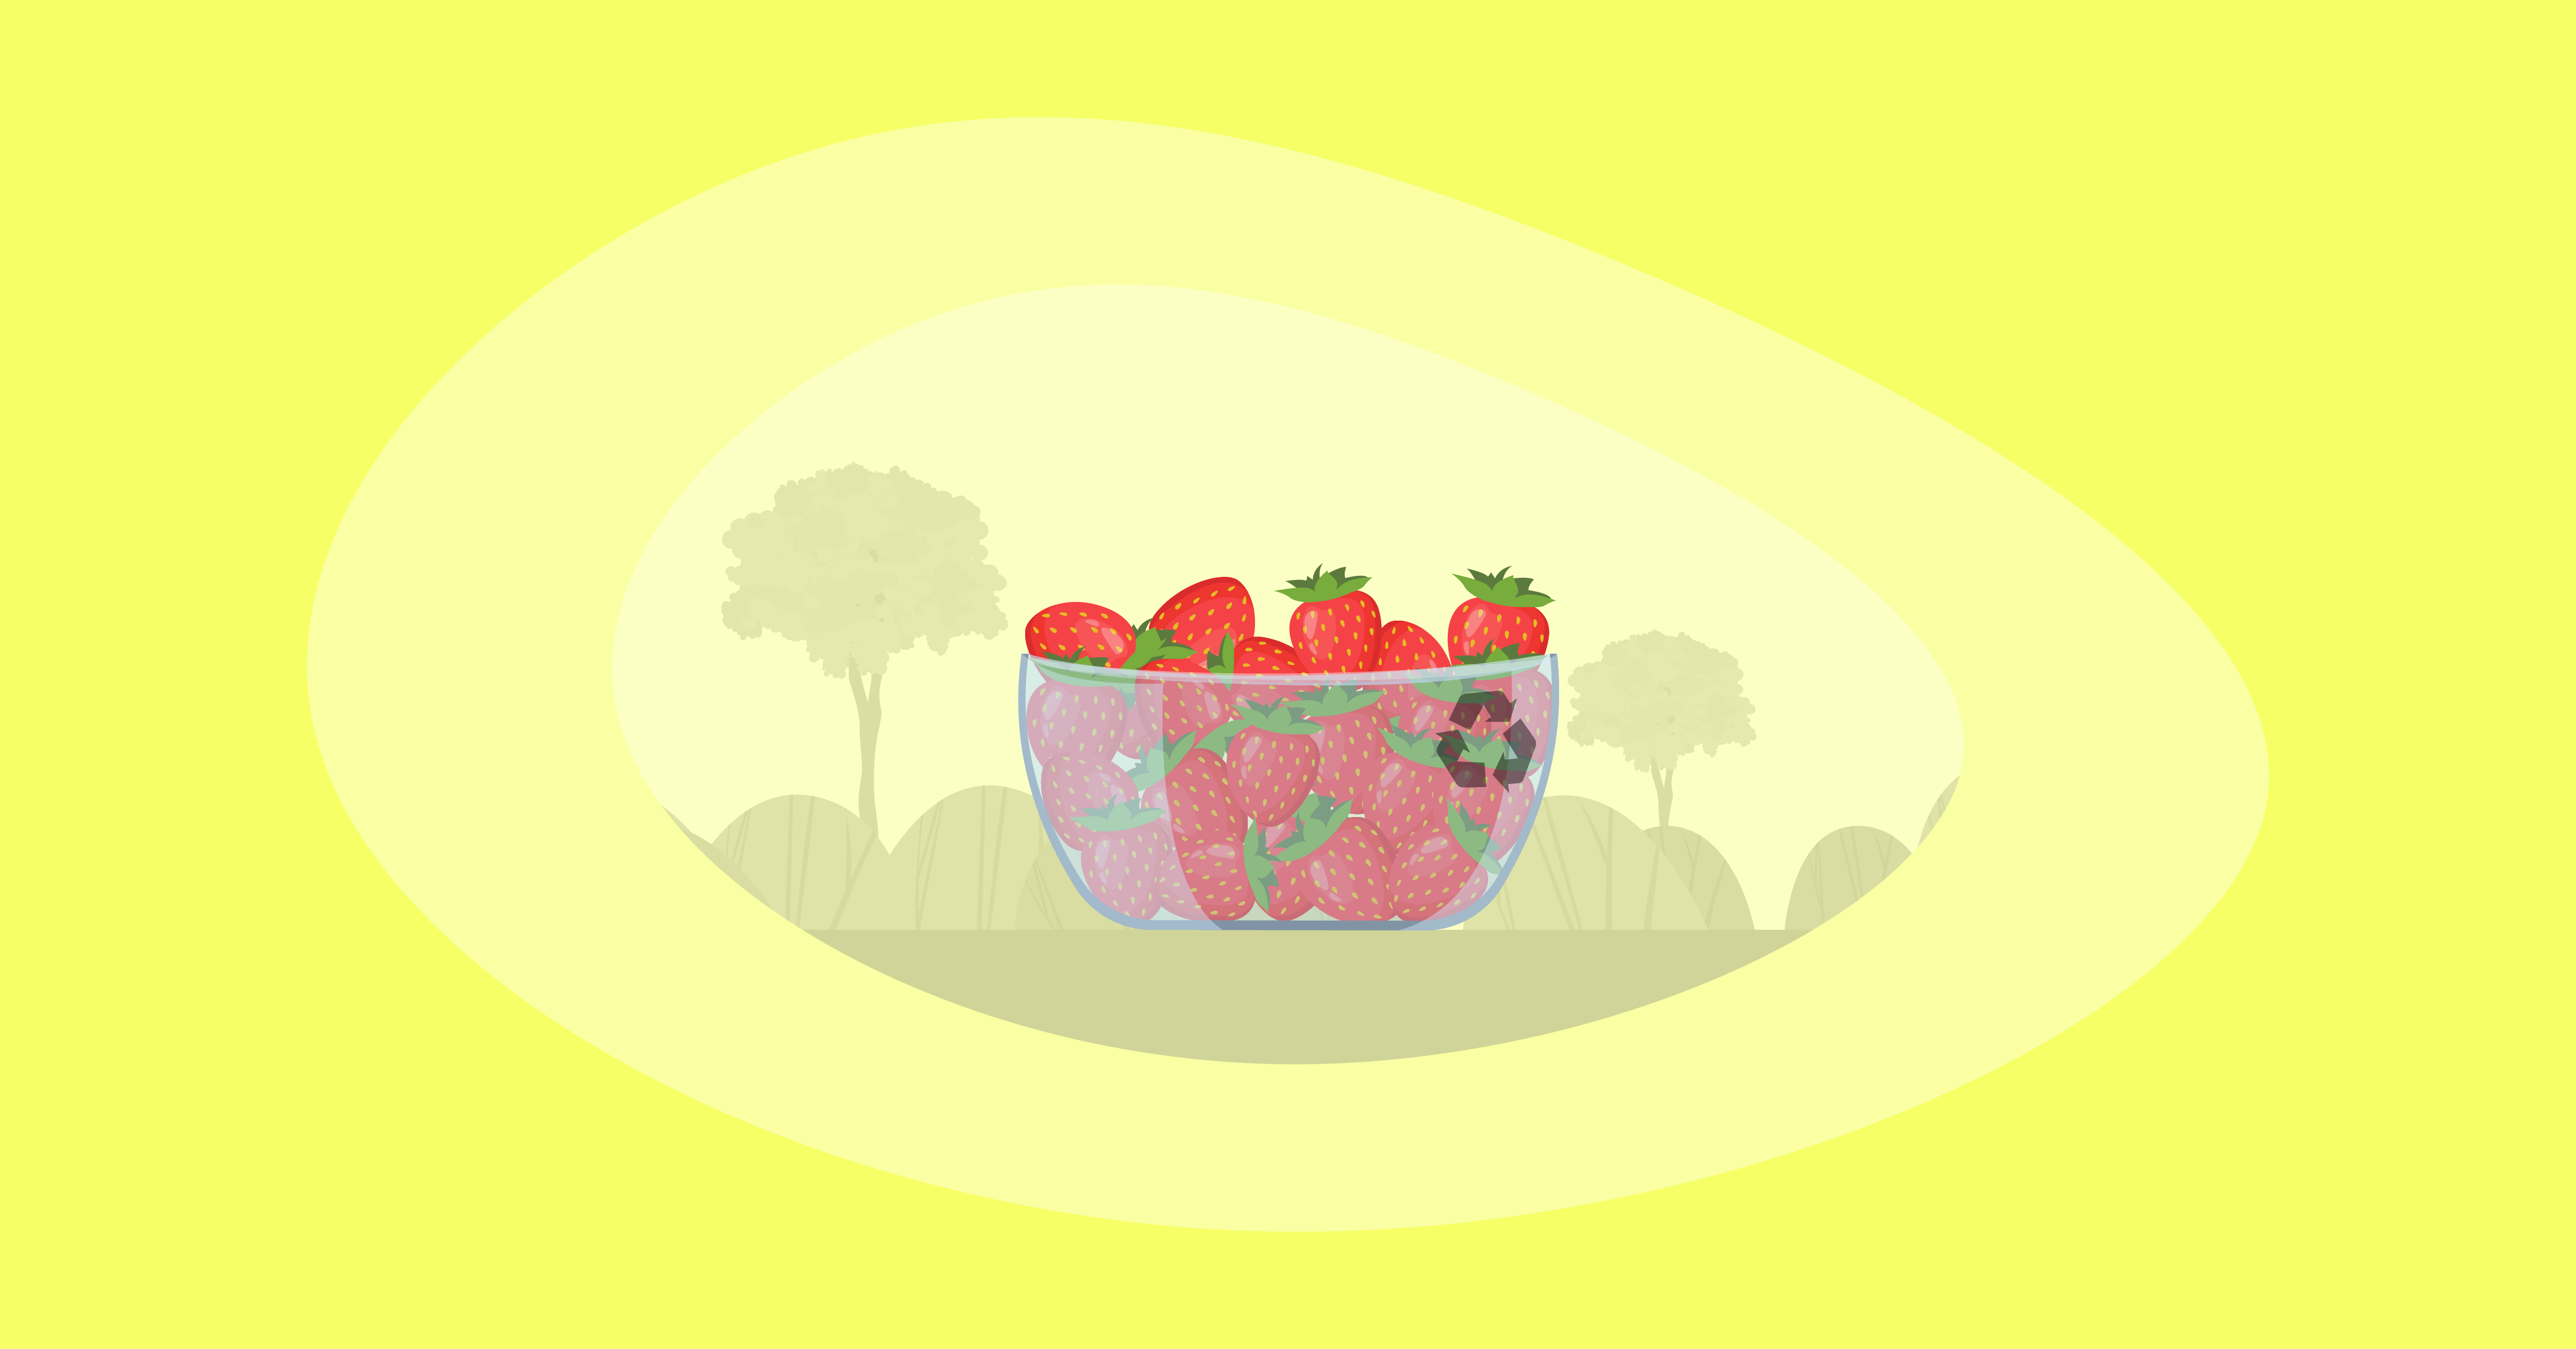 Illustration of strawberries inside a glass bowl